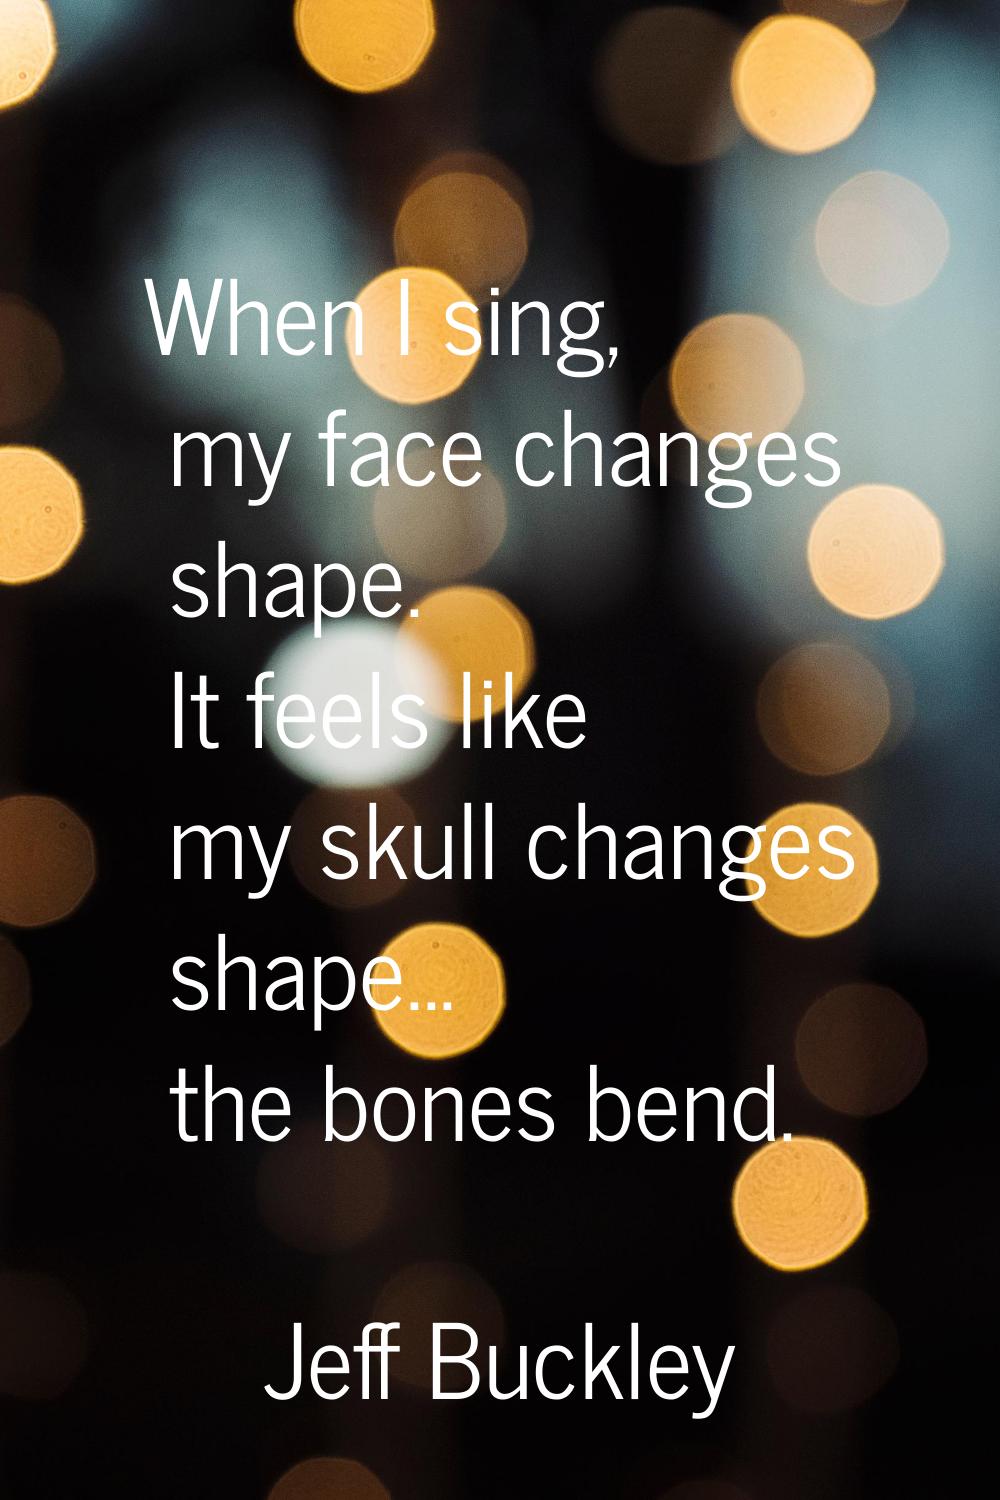 When I sing, my face changes shape. It feels like my skull changes shape... the bones bend.